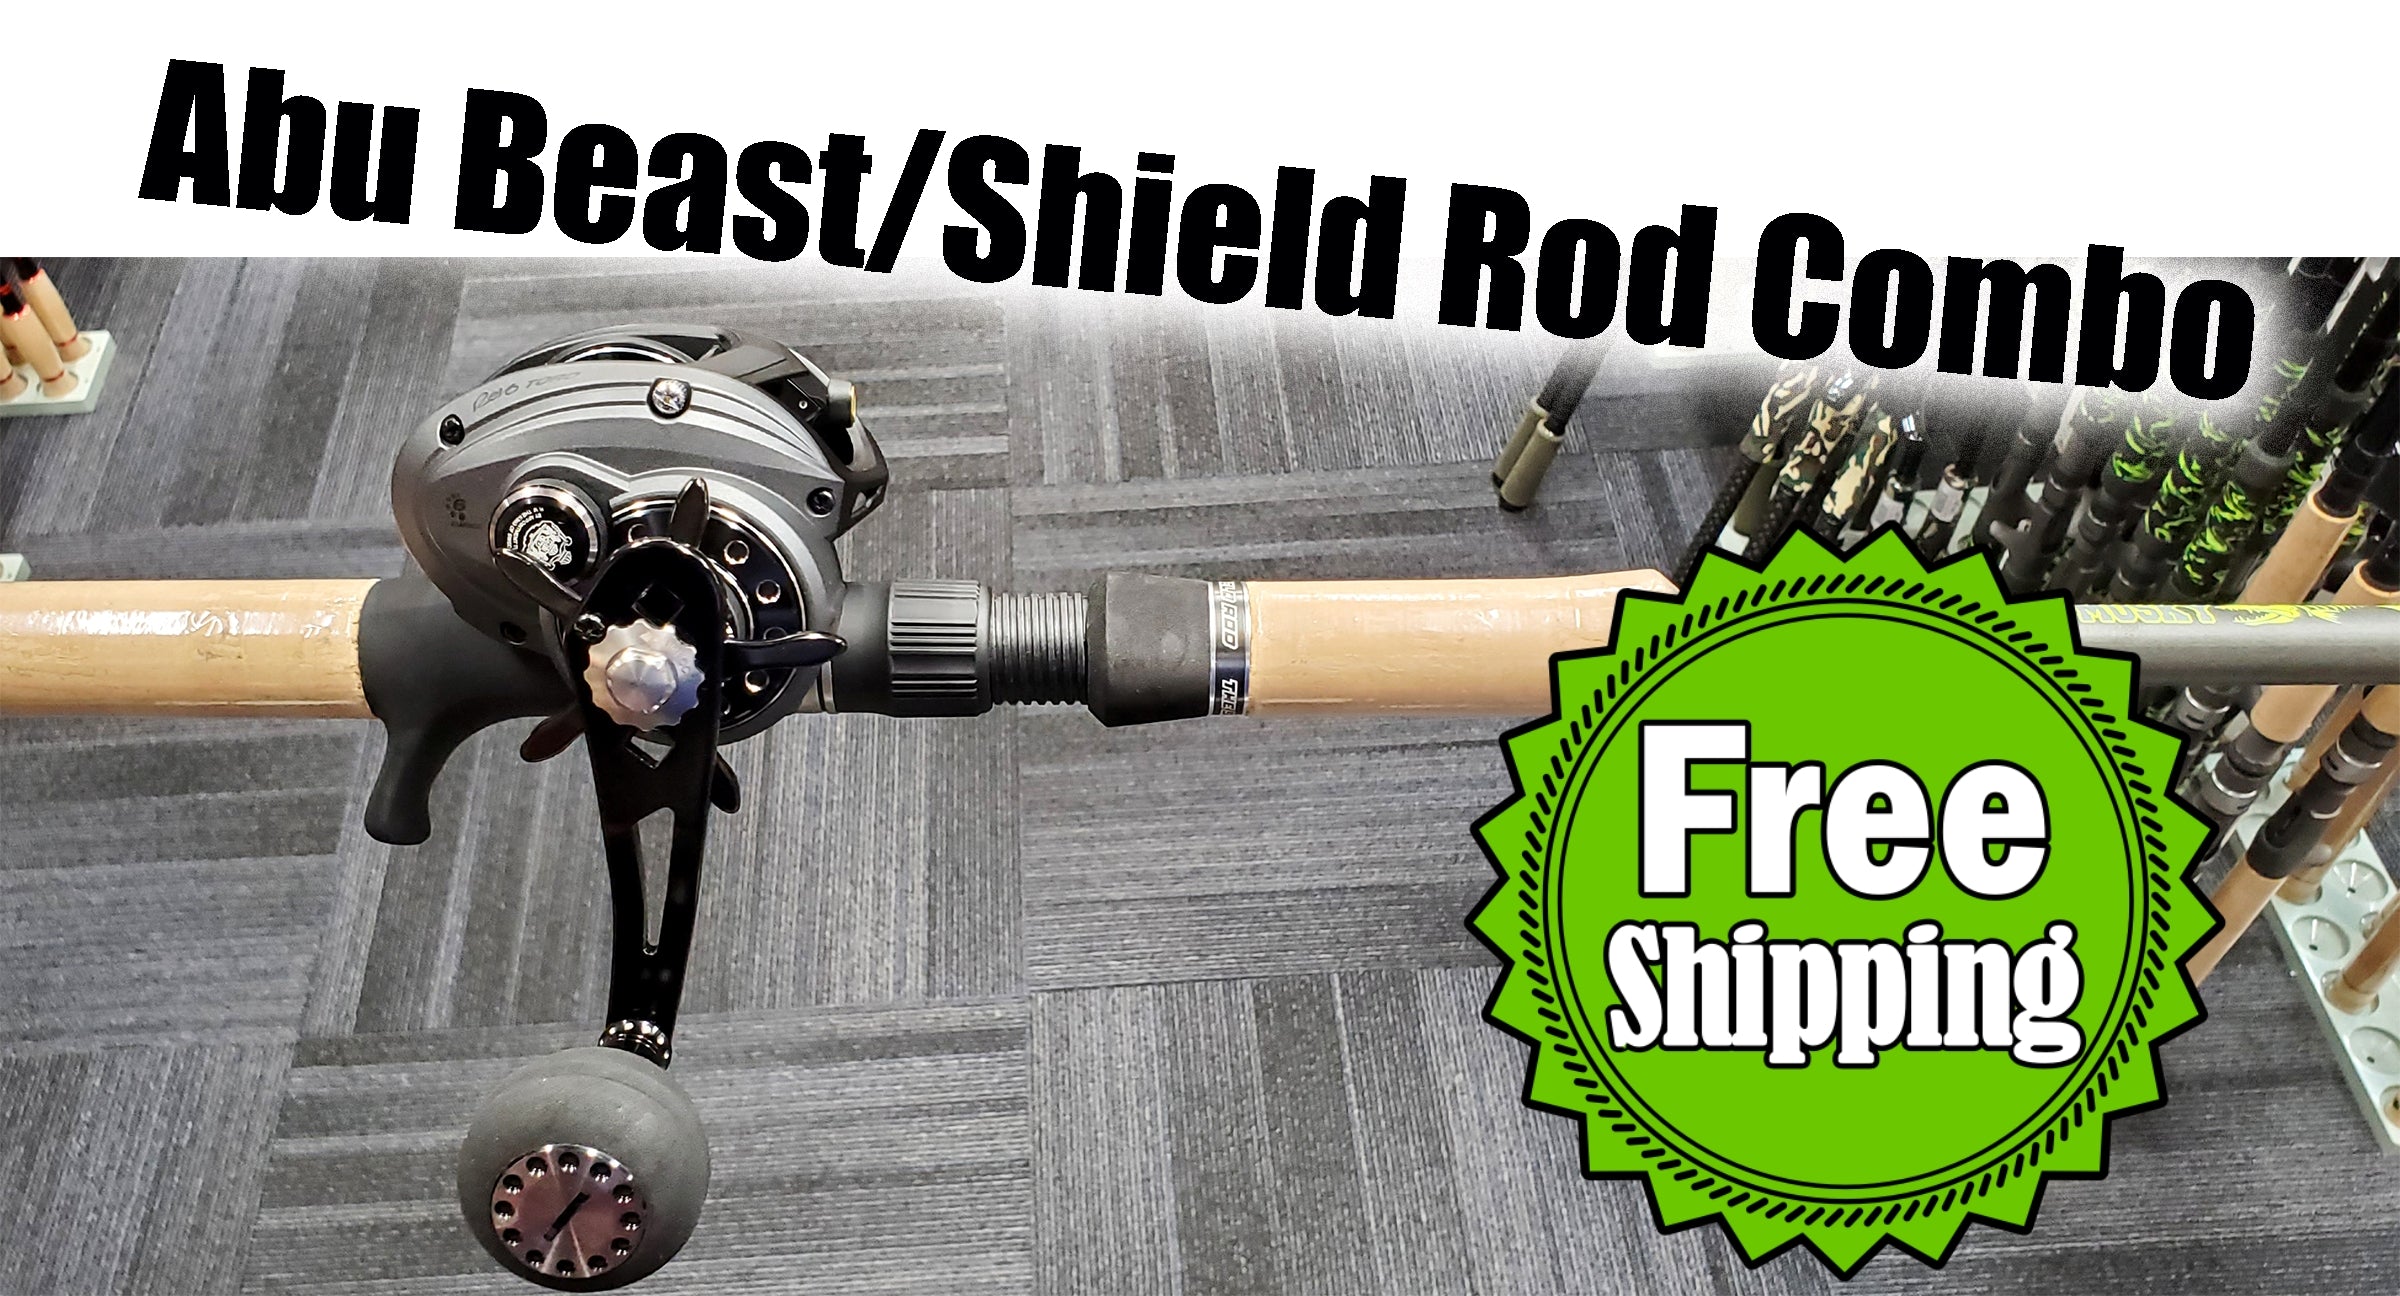 Musky Shop Kayak Shield Series Rod 7' Heavy One-Piece